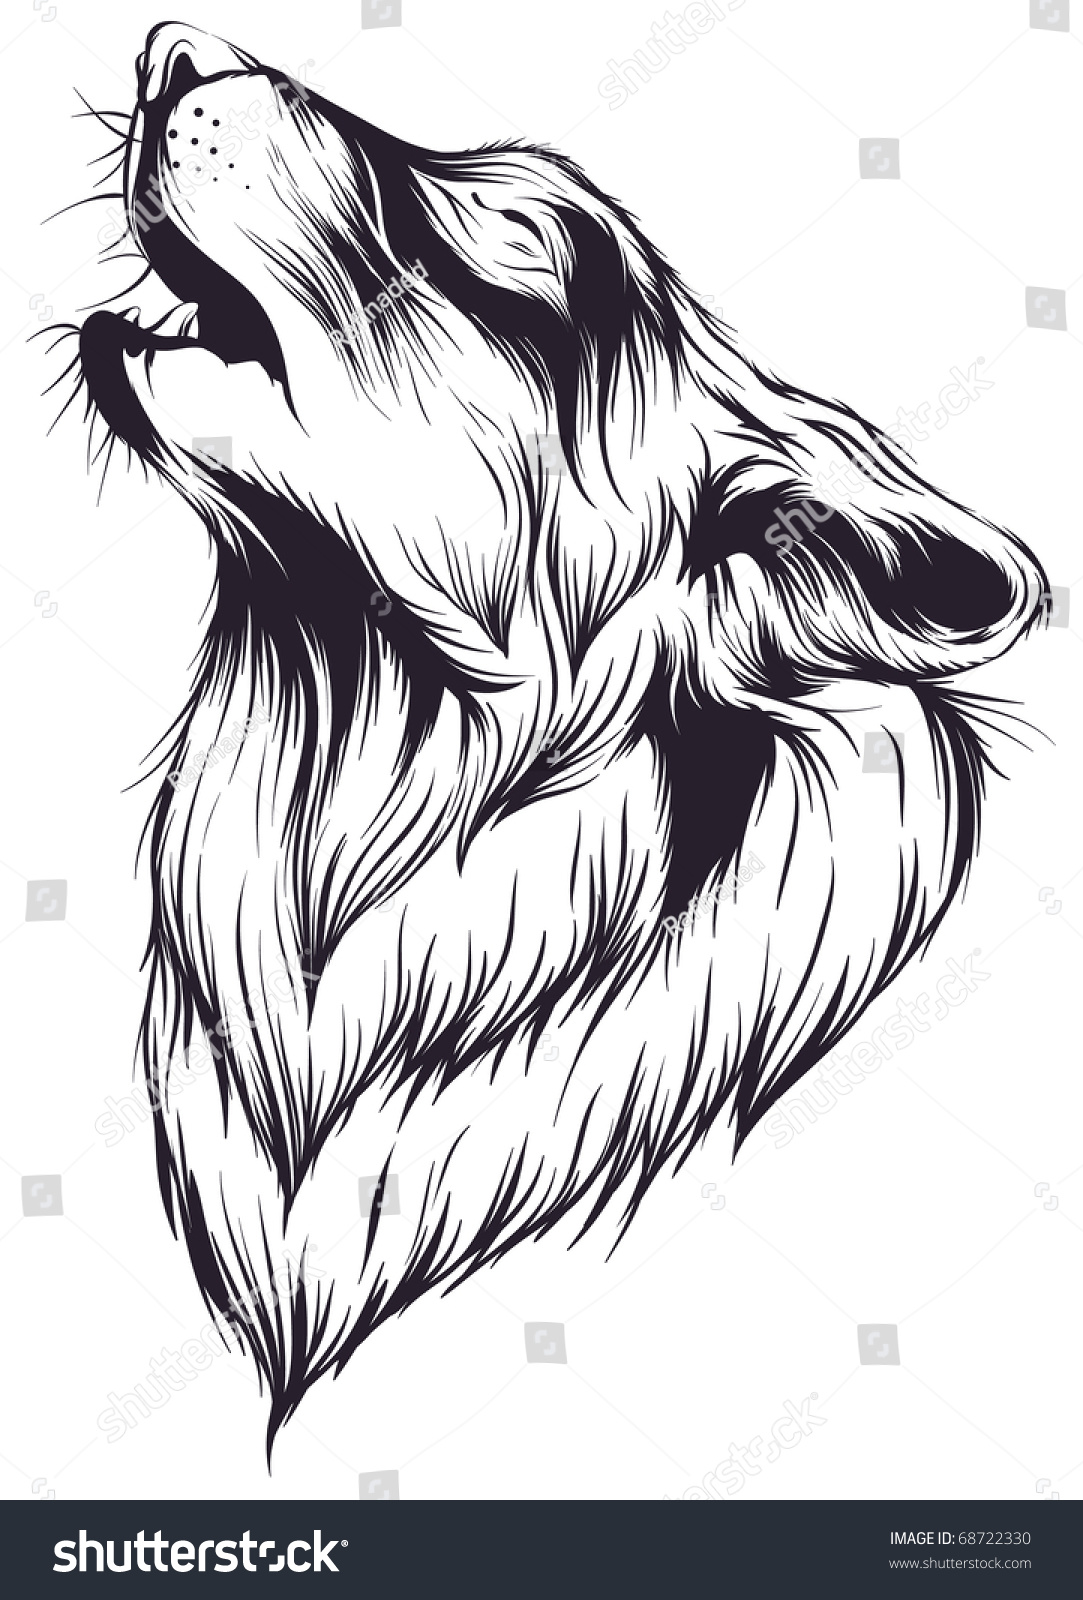 Wolf Stock Vector Illustration 68722330 : Shutterstock